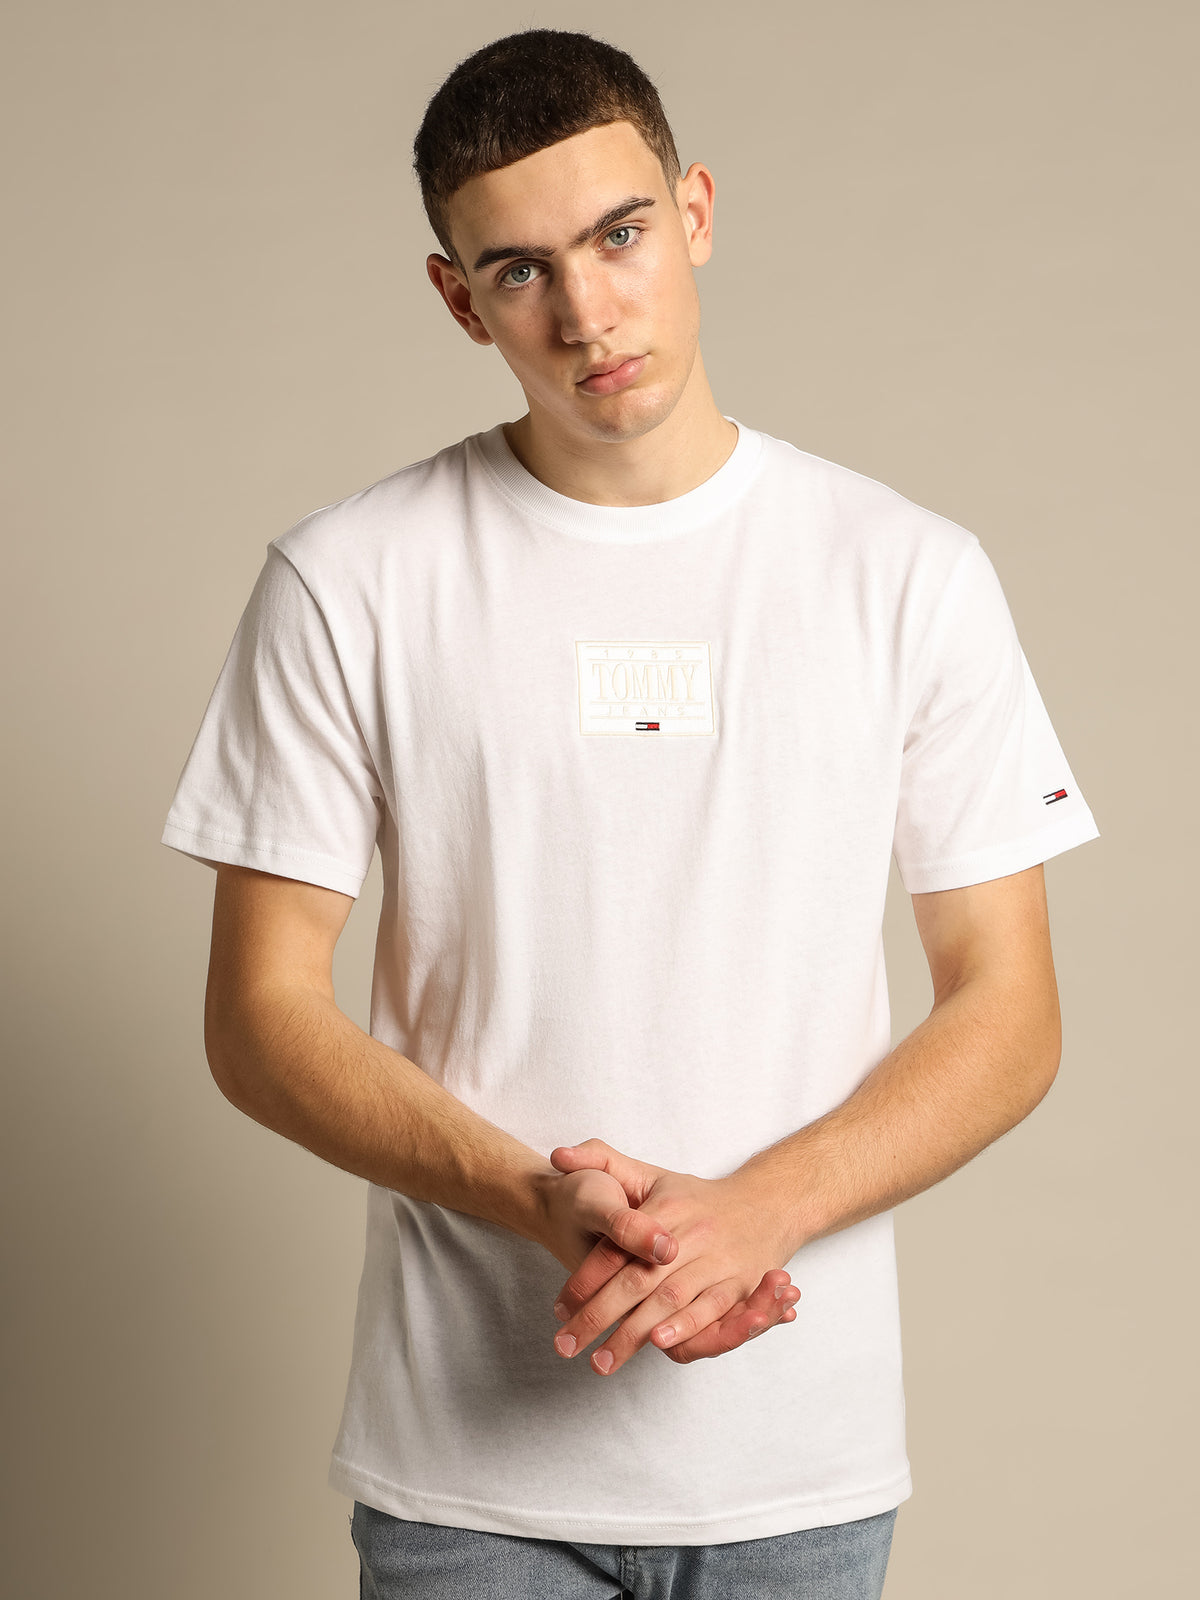 Tonal Box T-Shirt in White